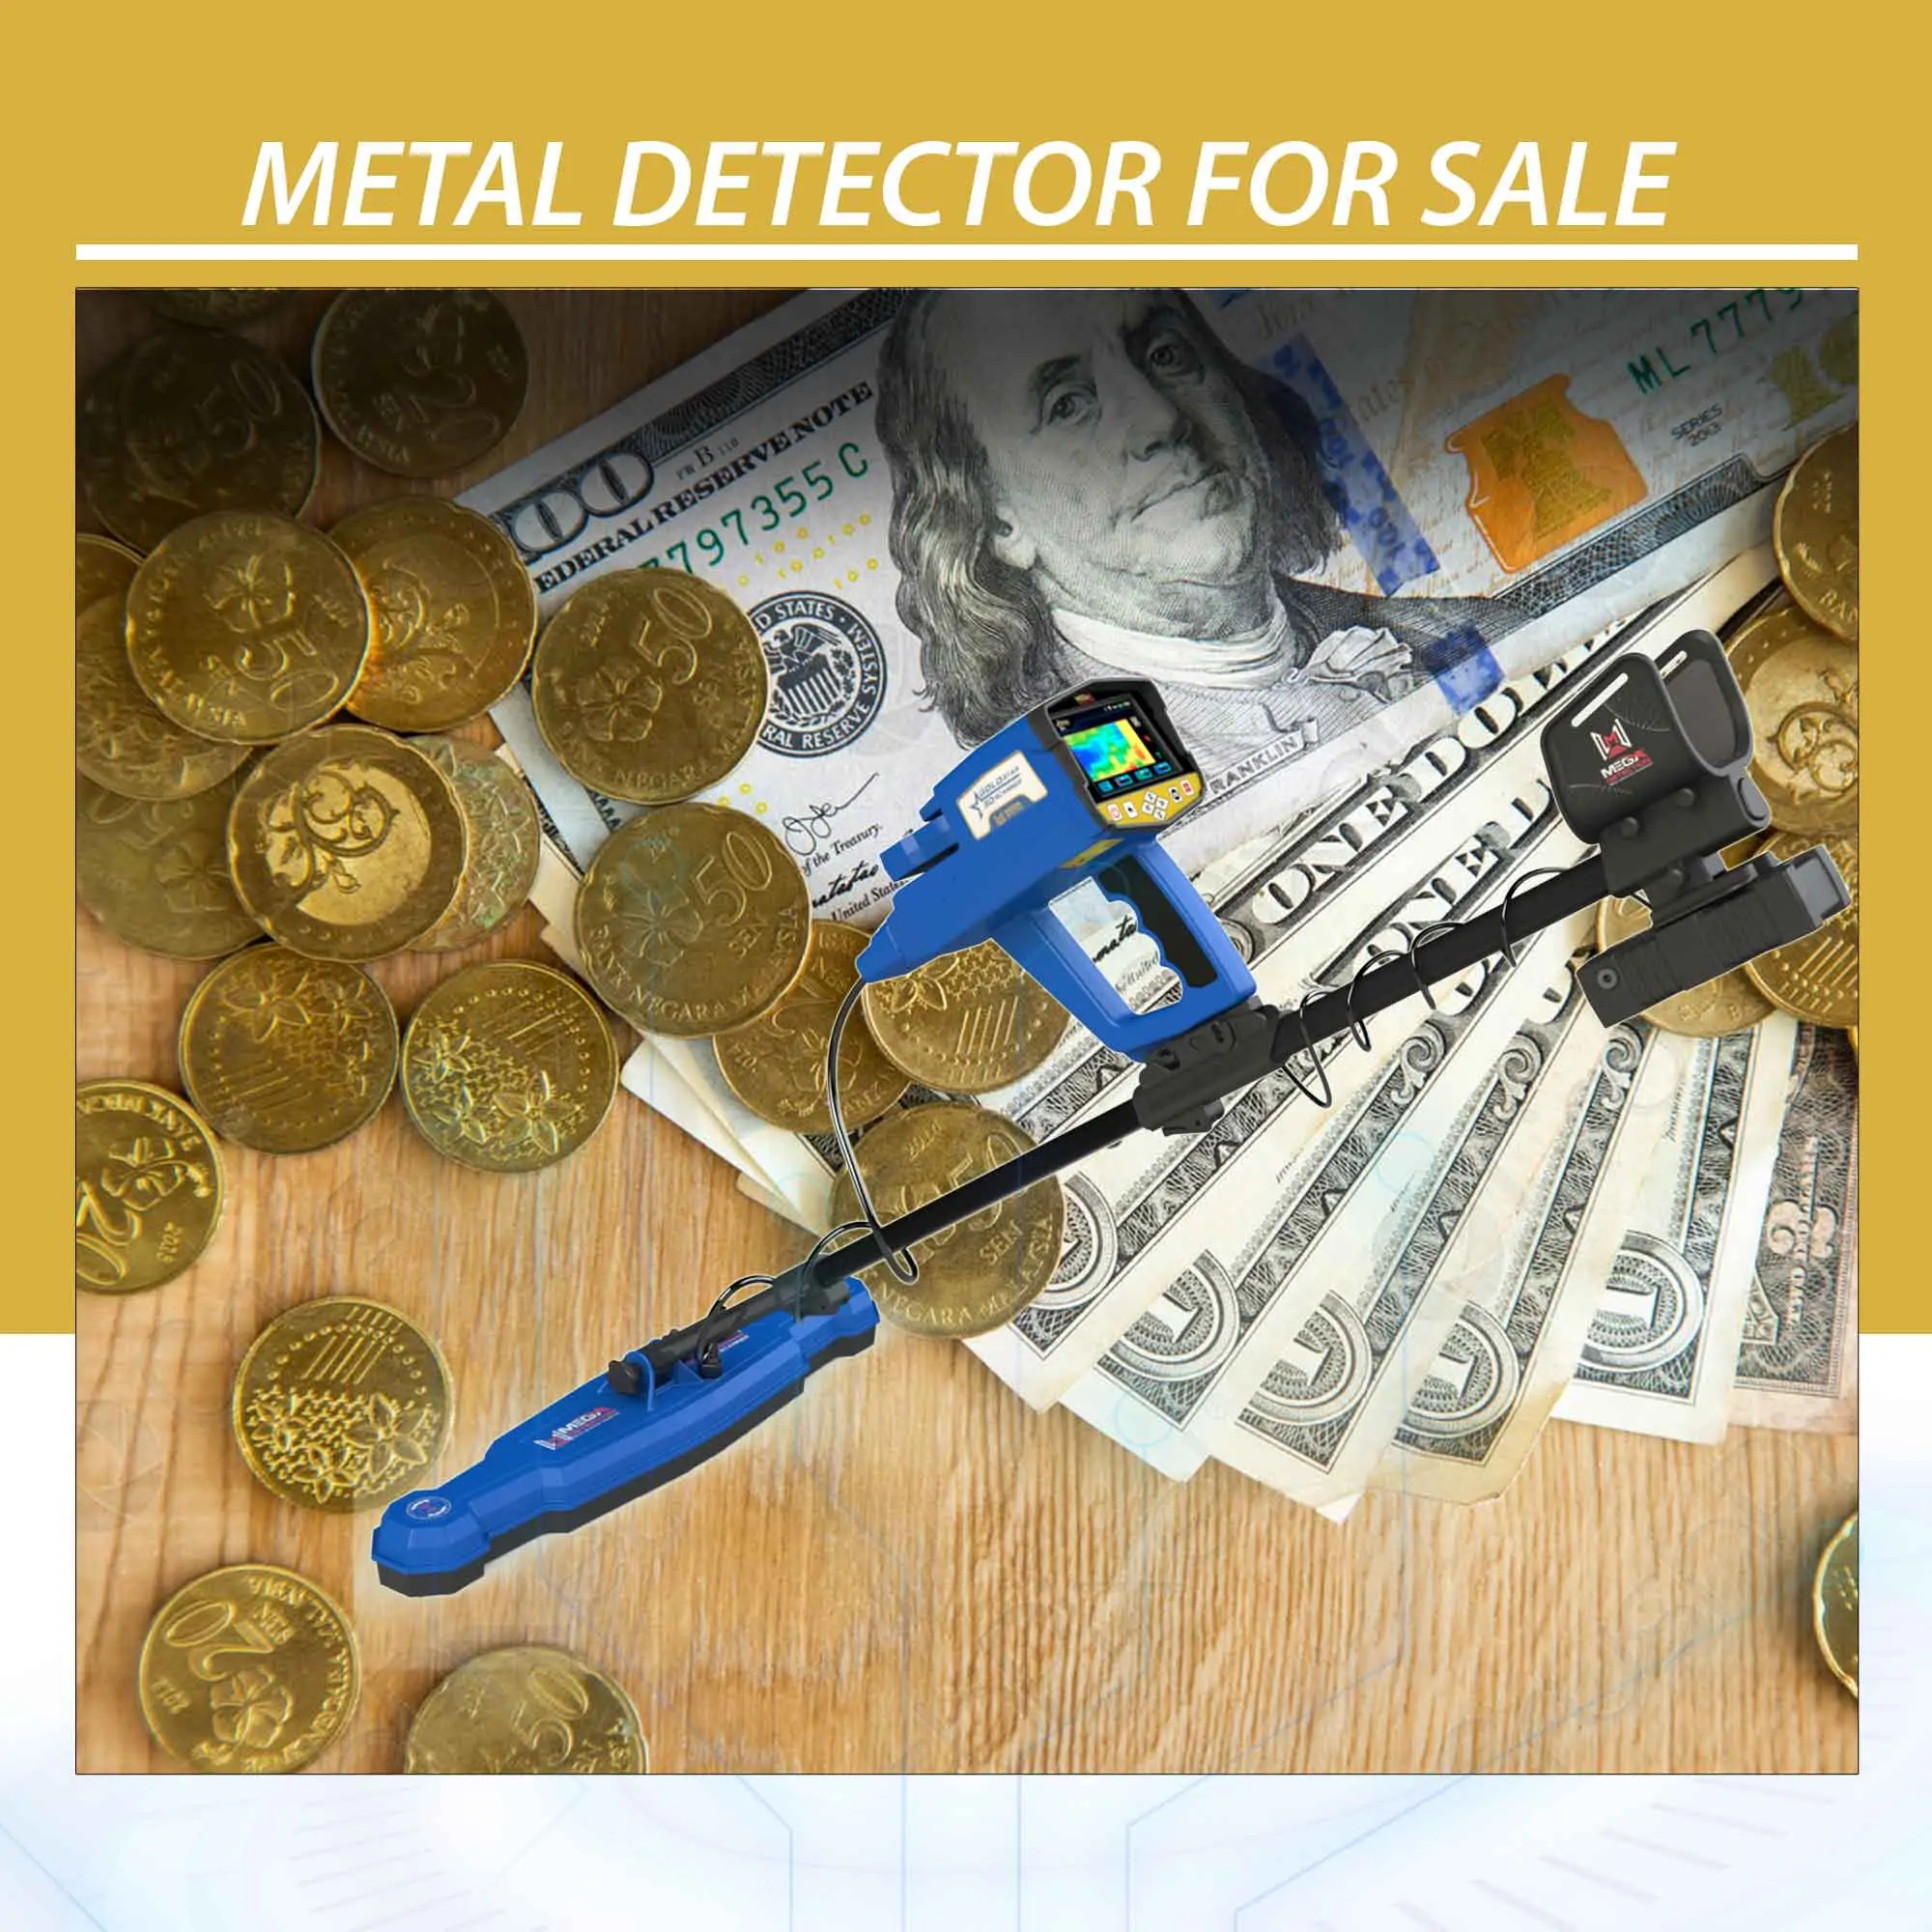 Metal Detector for Sale